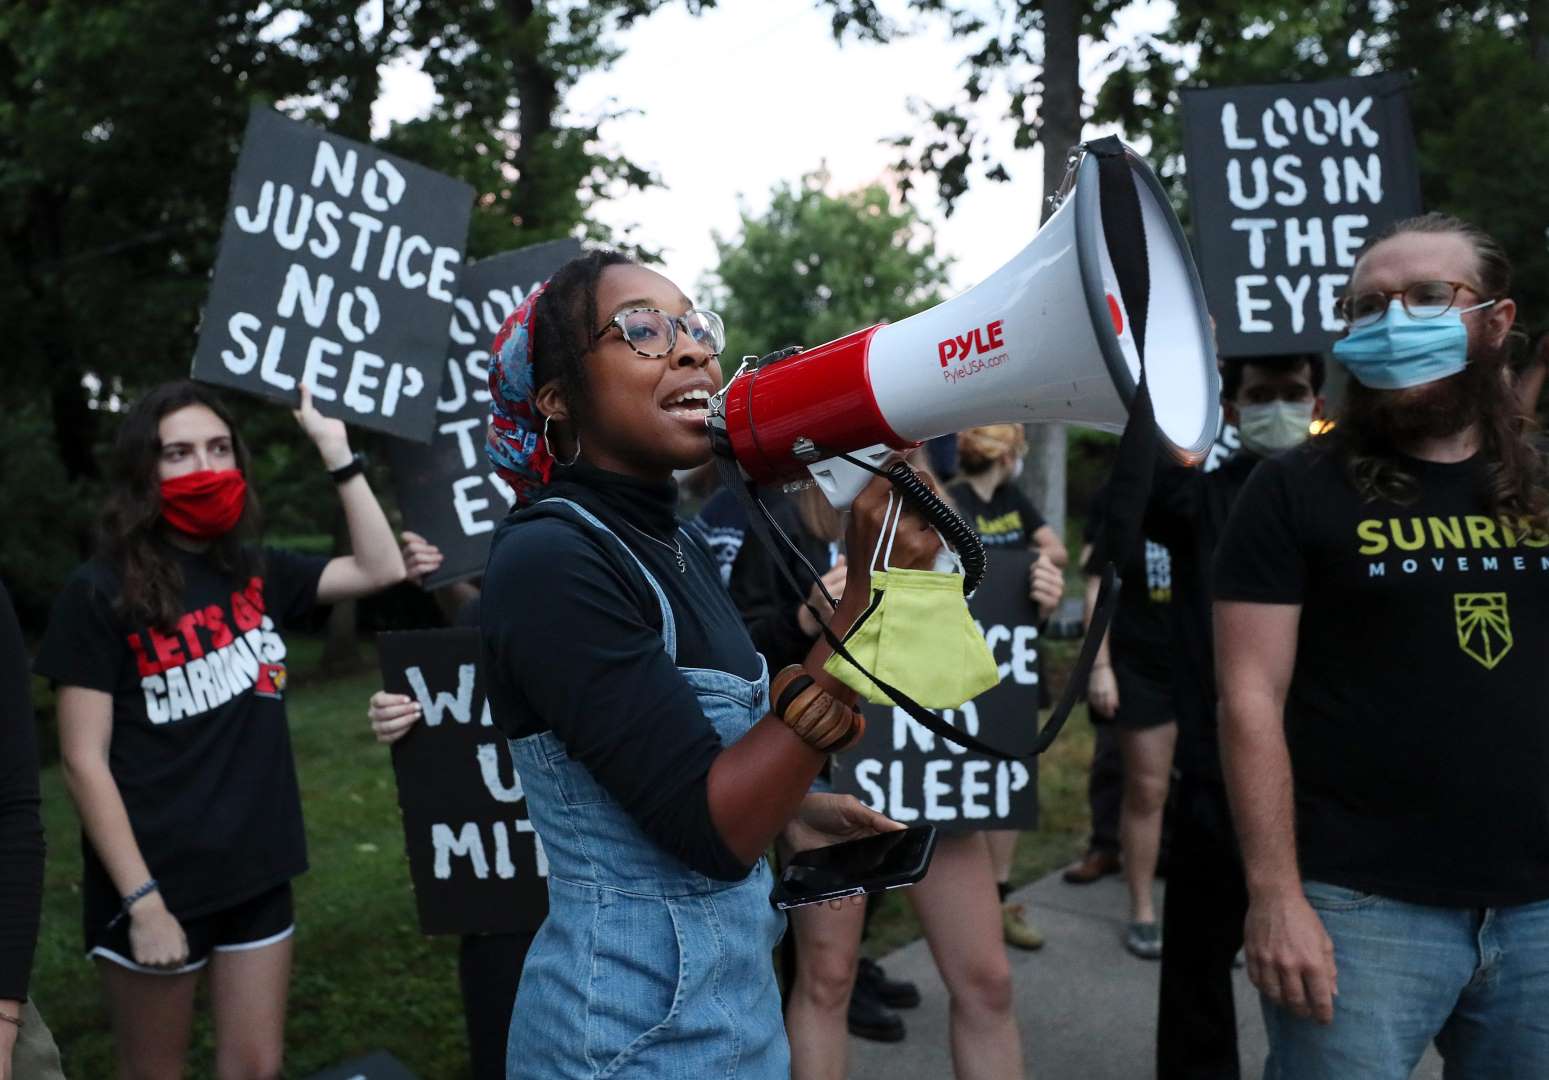 Активист Sunrise говорит в мегафон, в то время как другие протестующие стоят за плакатами с надписями «Нет правосудию, нет сна» и «Посмотри нам в глаза».